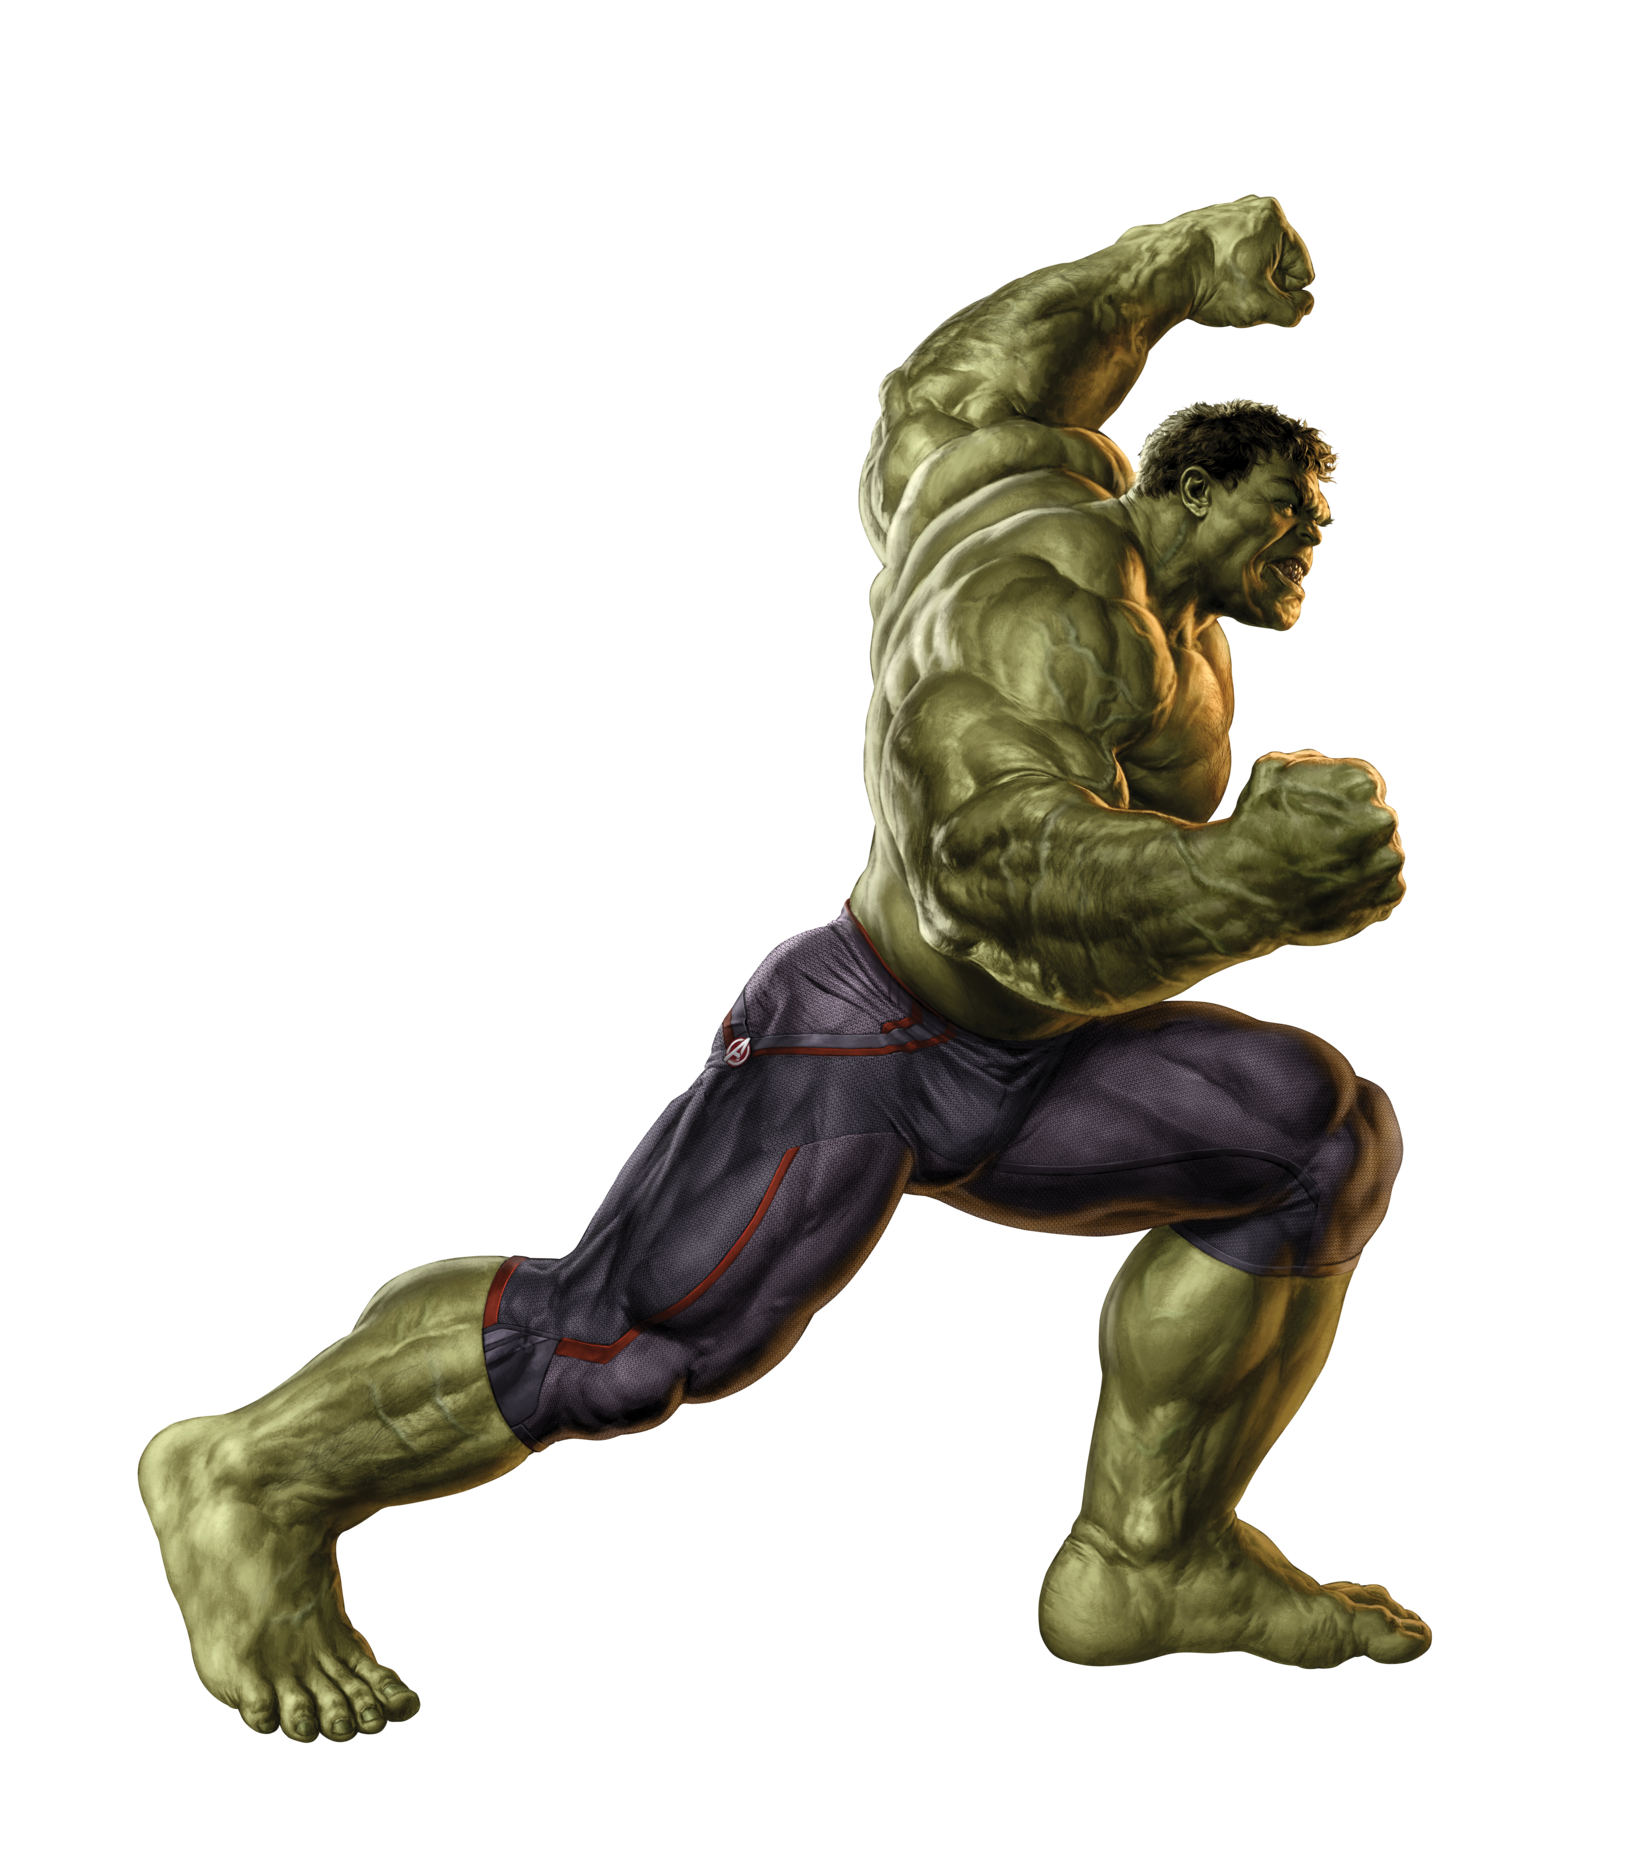 Hulk PNG High-Quality Image